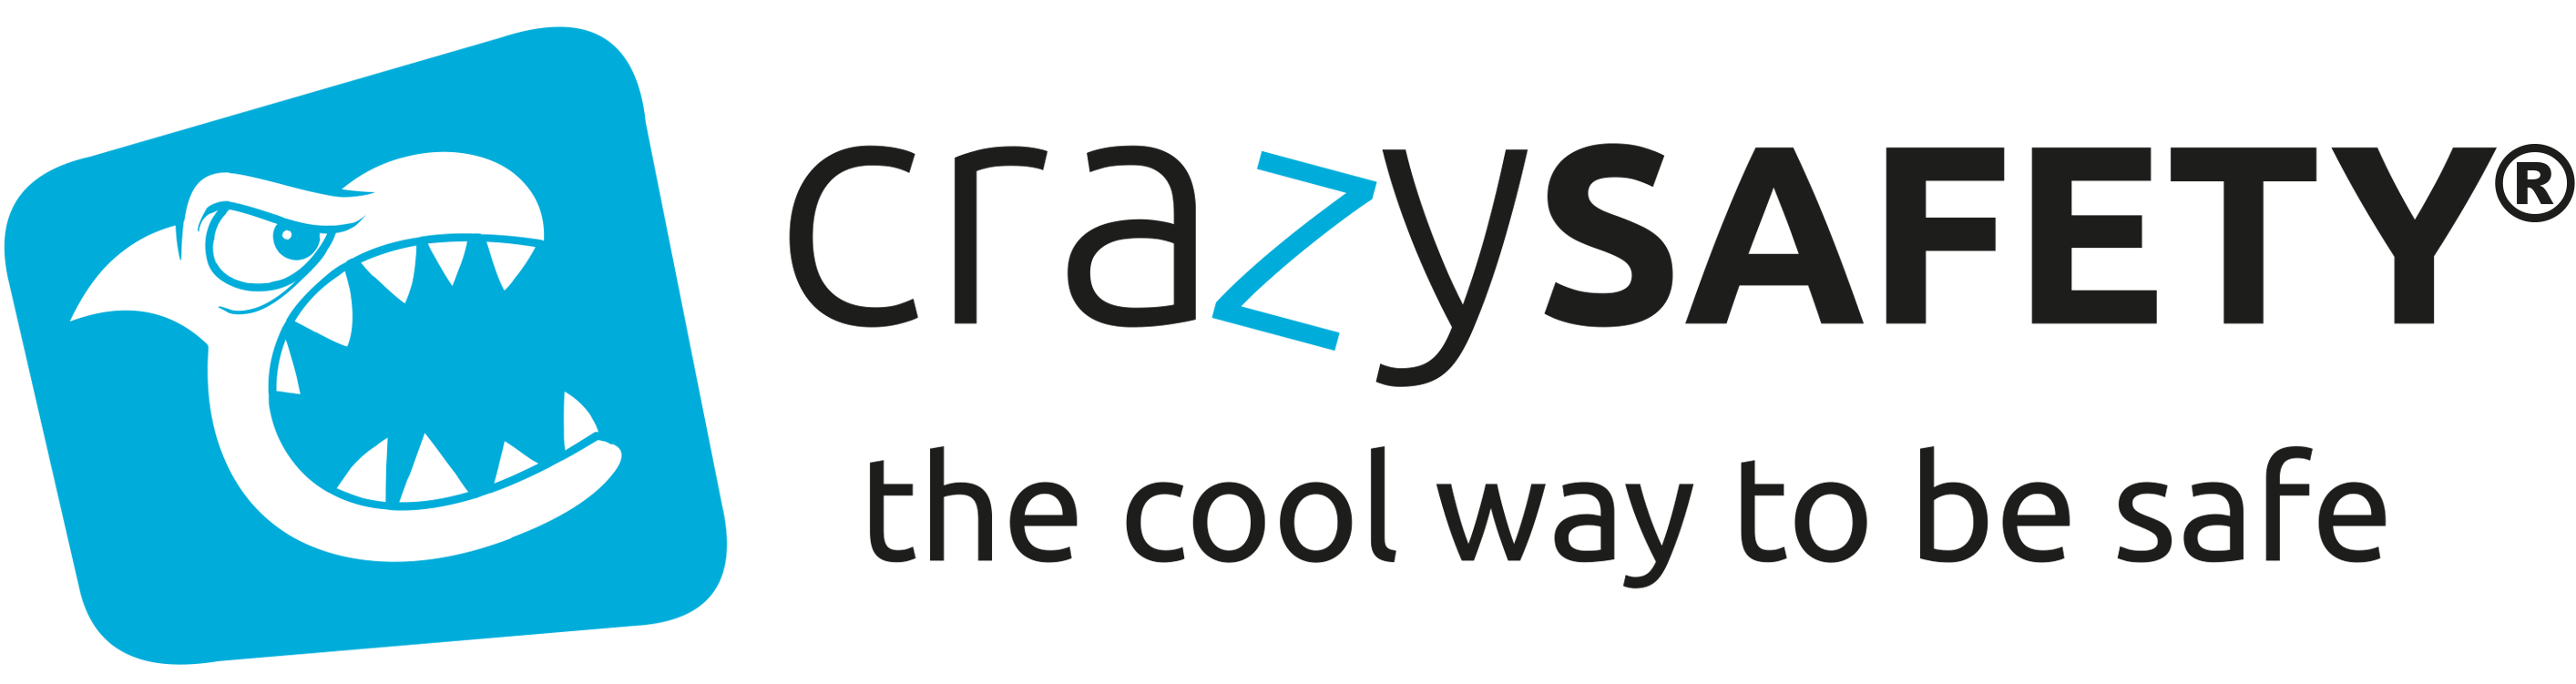 Crazy Safety Help Center logo